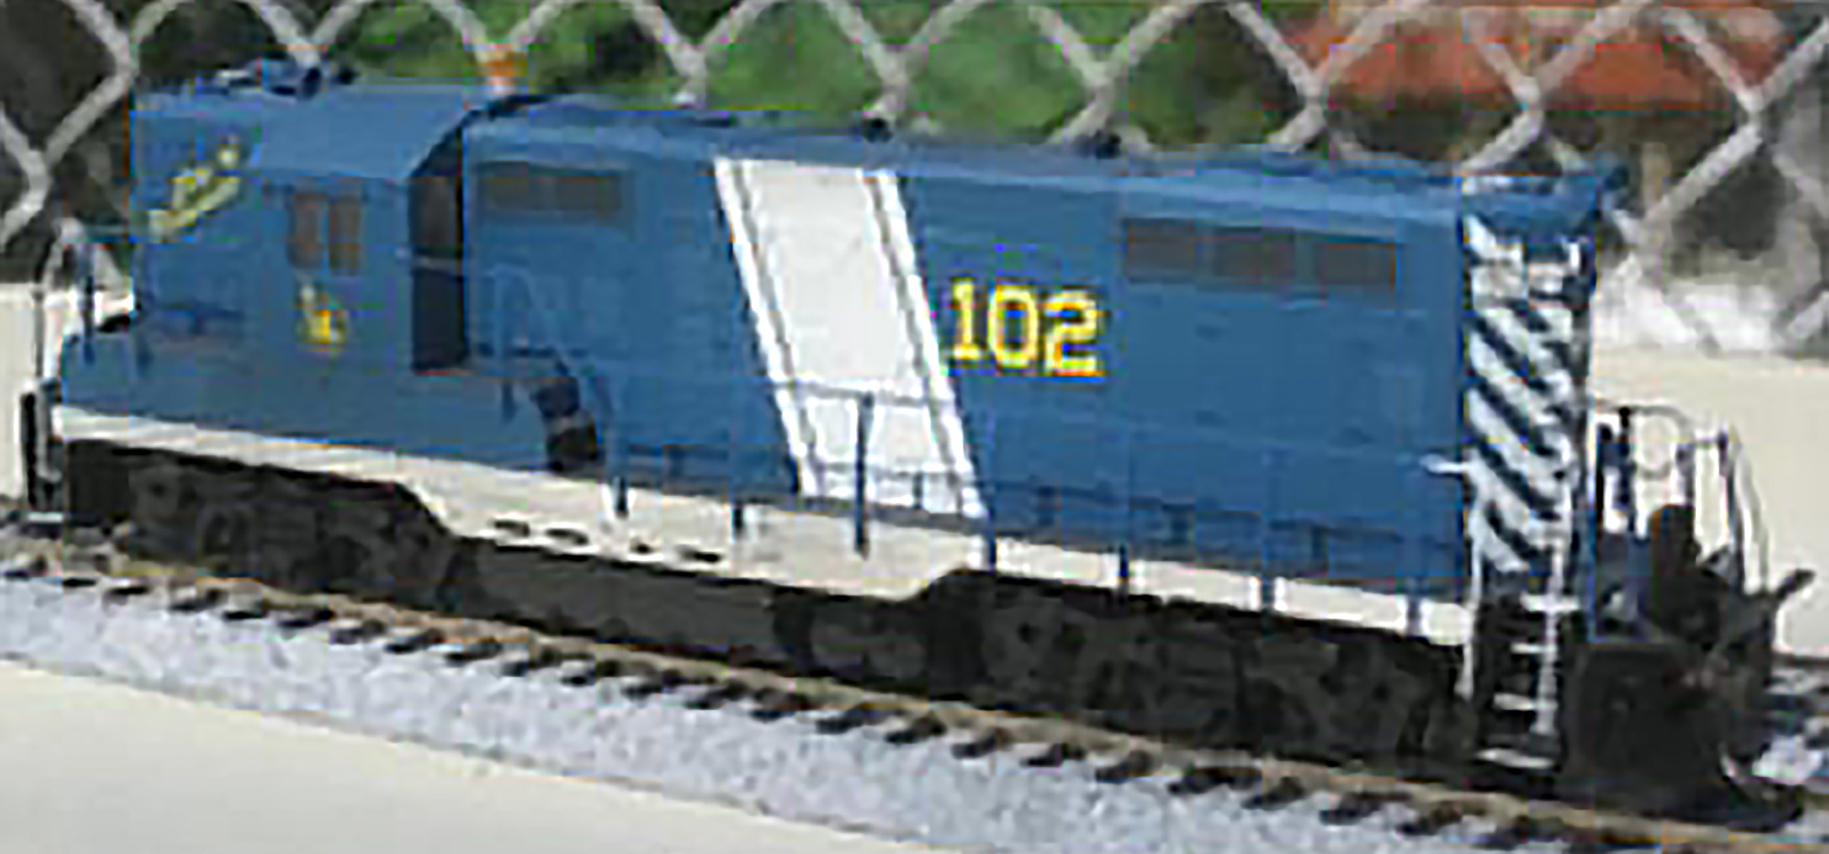 Train 108